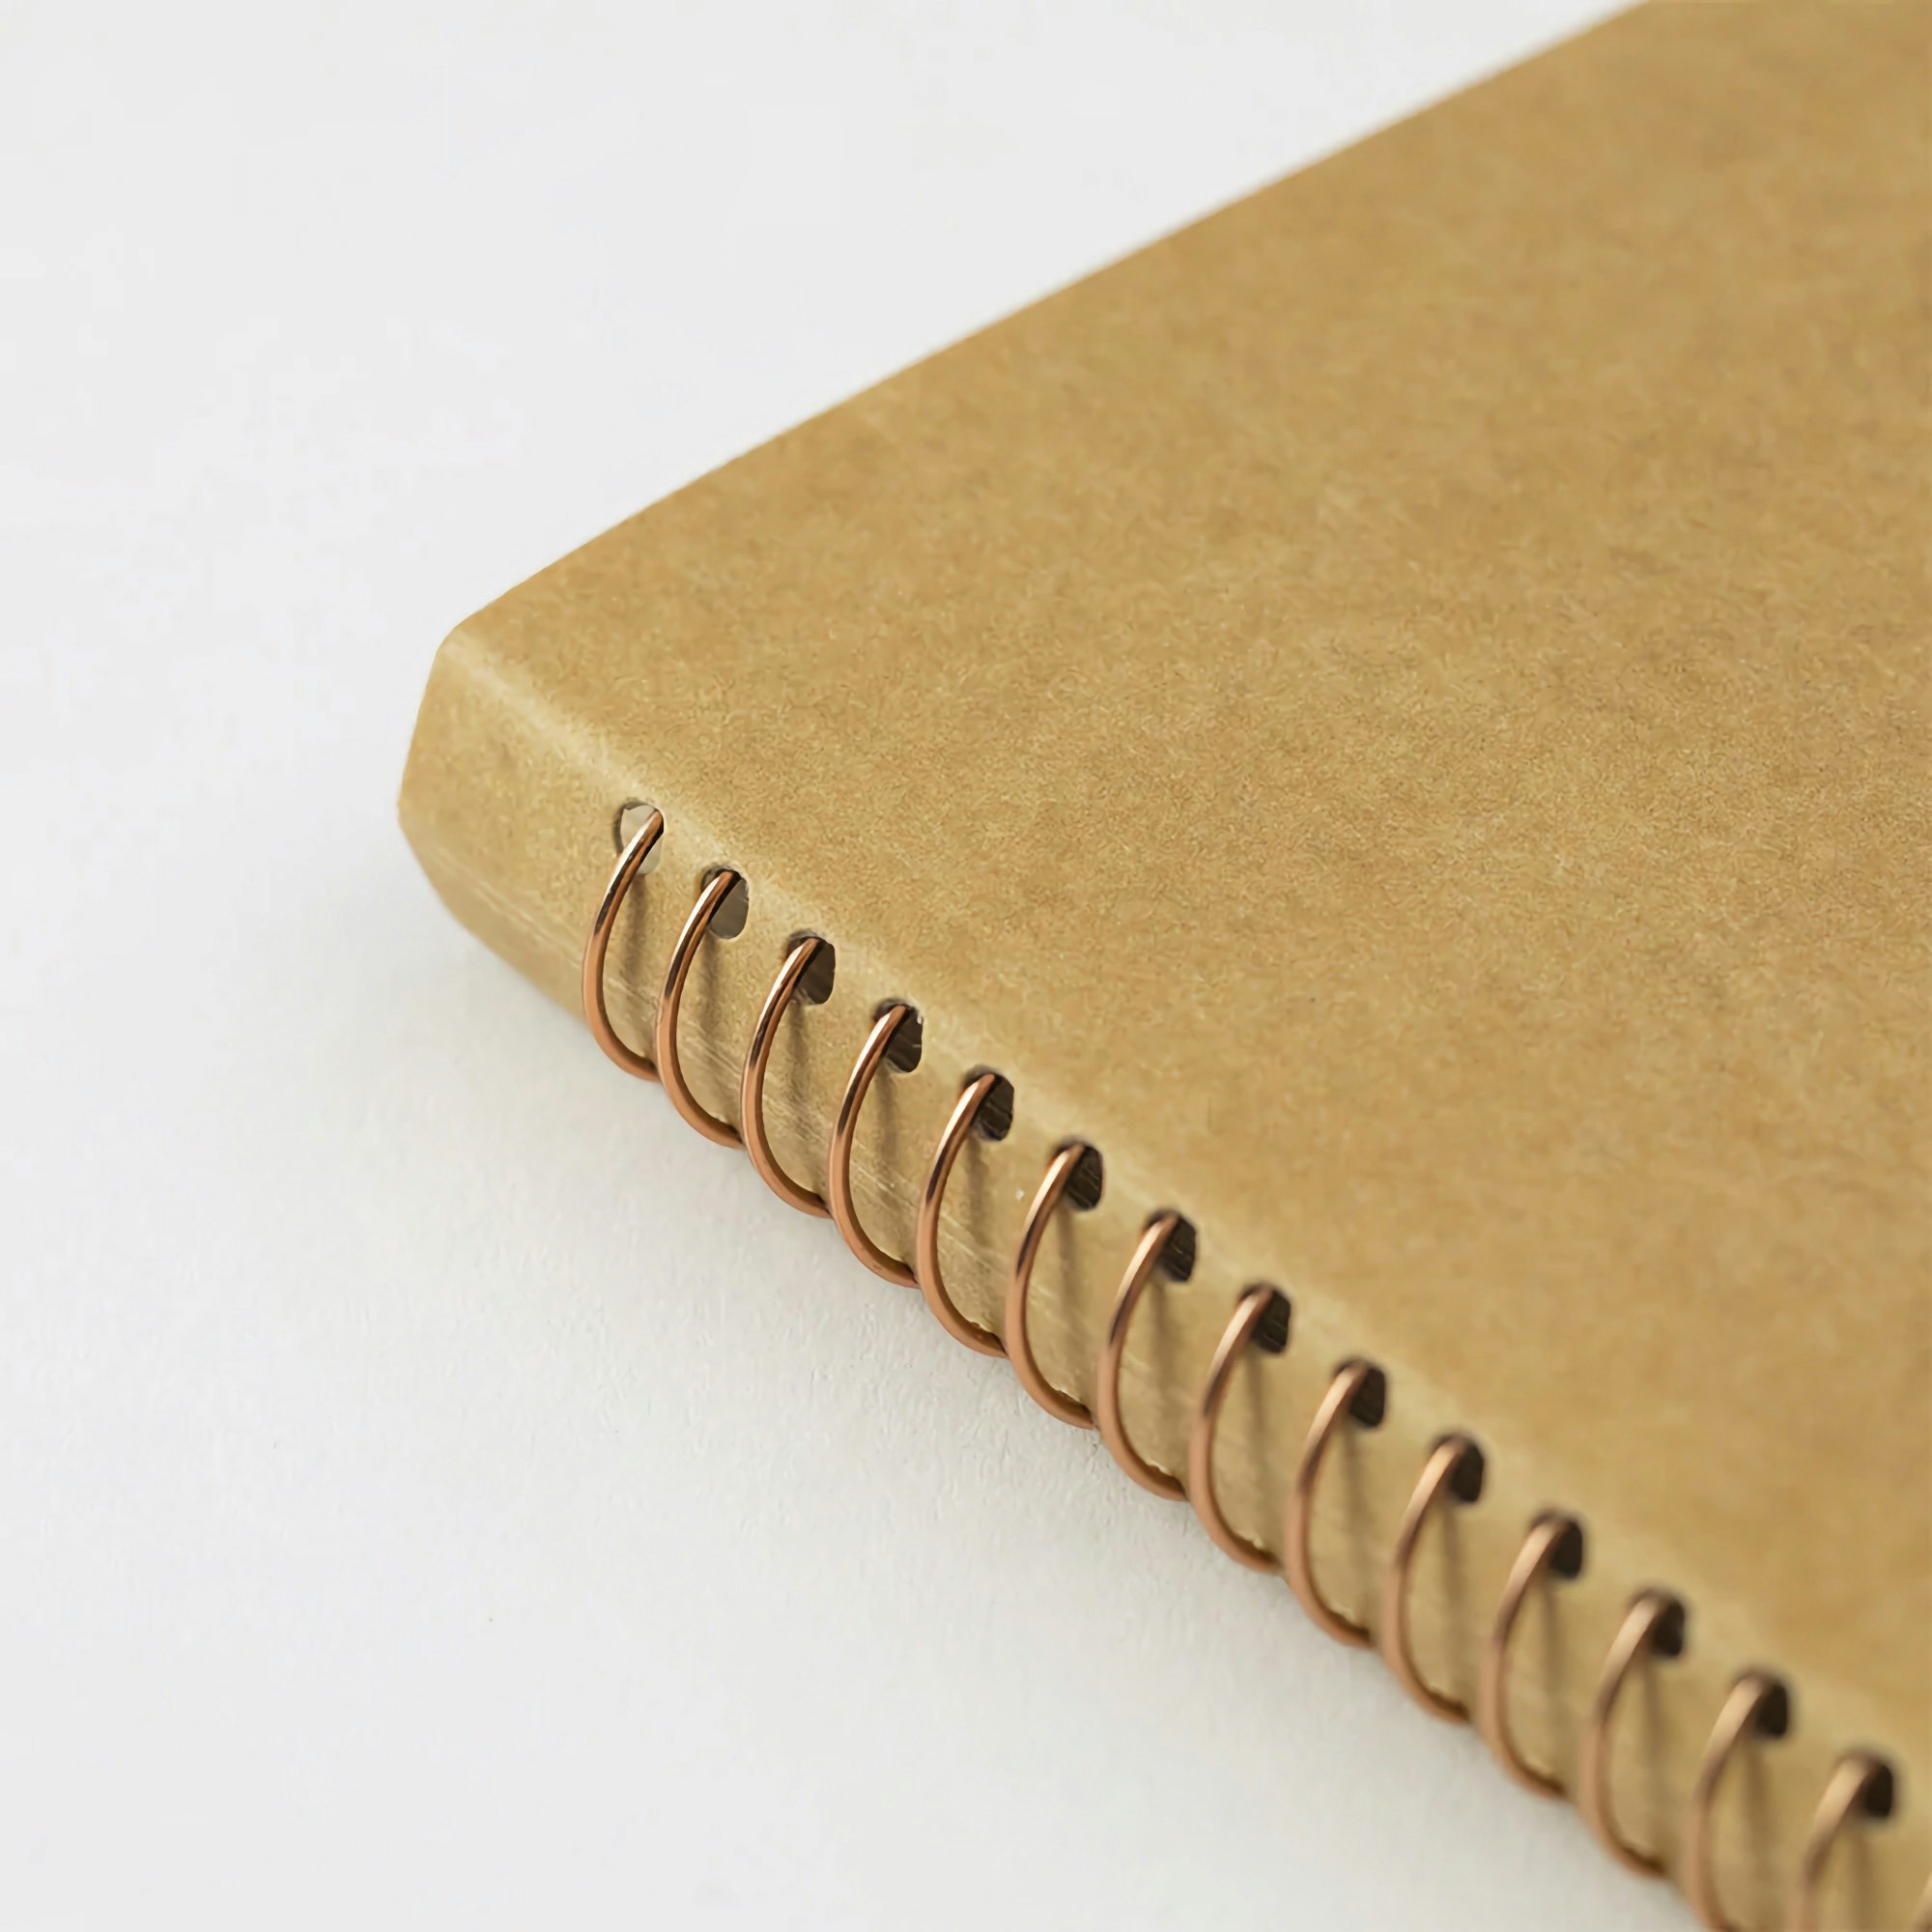 Traveler's Company Spiral Ring Notebook A6 Slim Kraft Paper